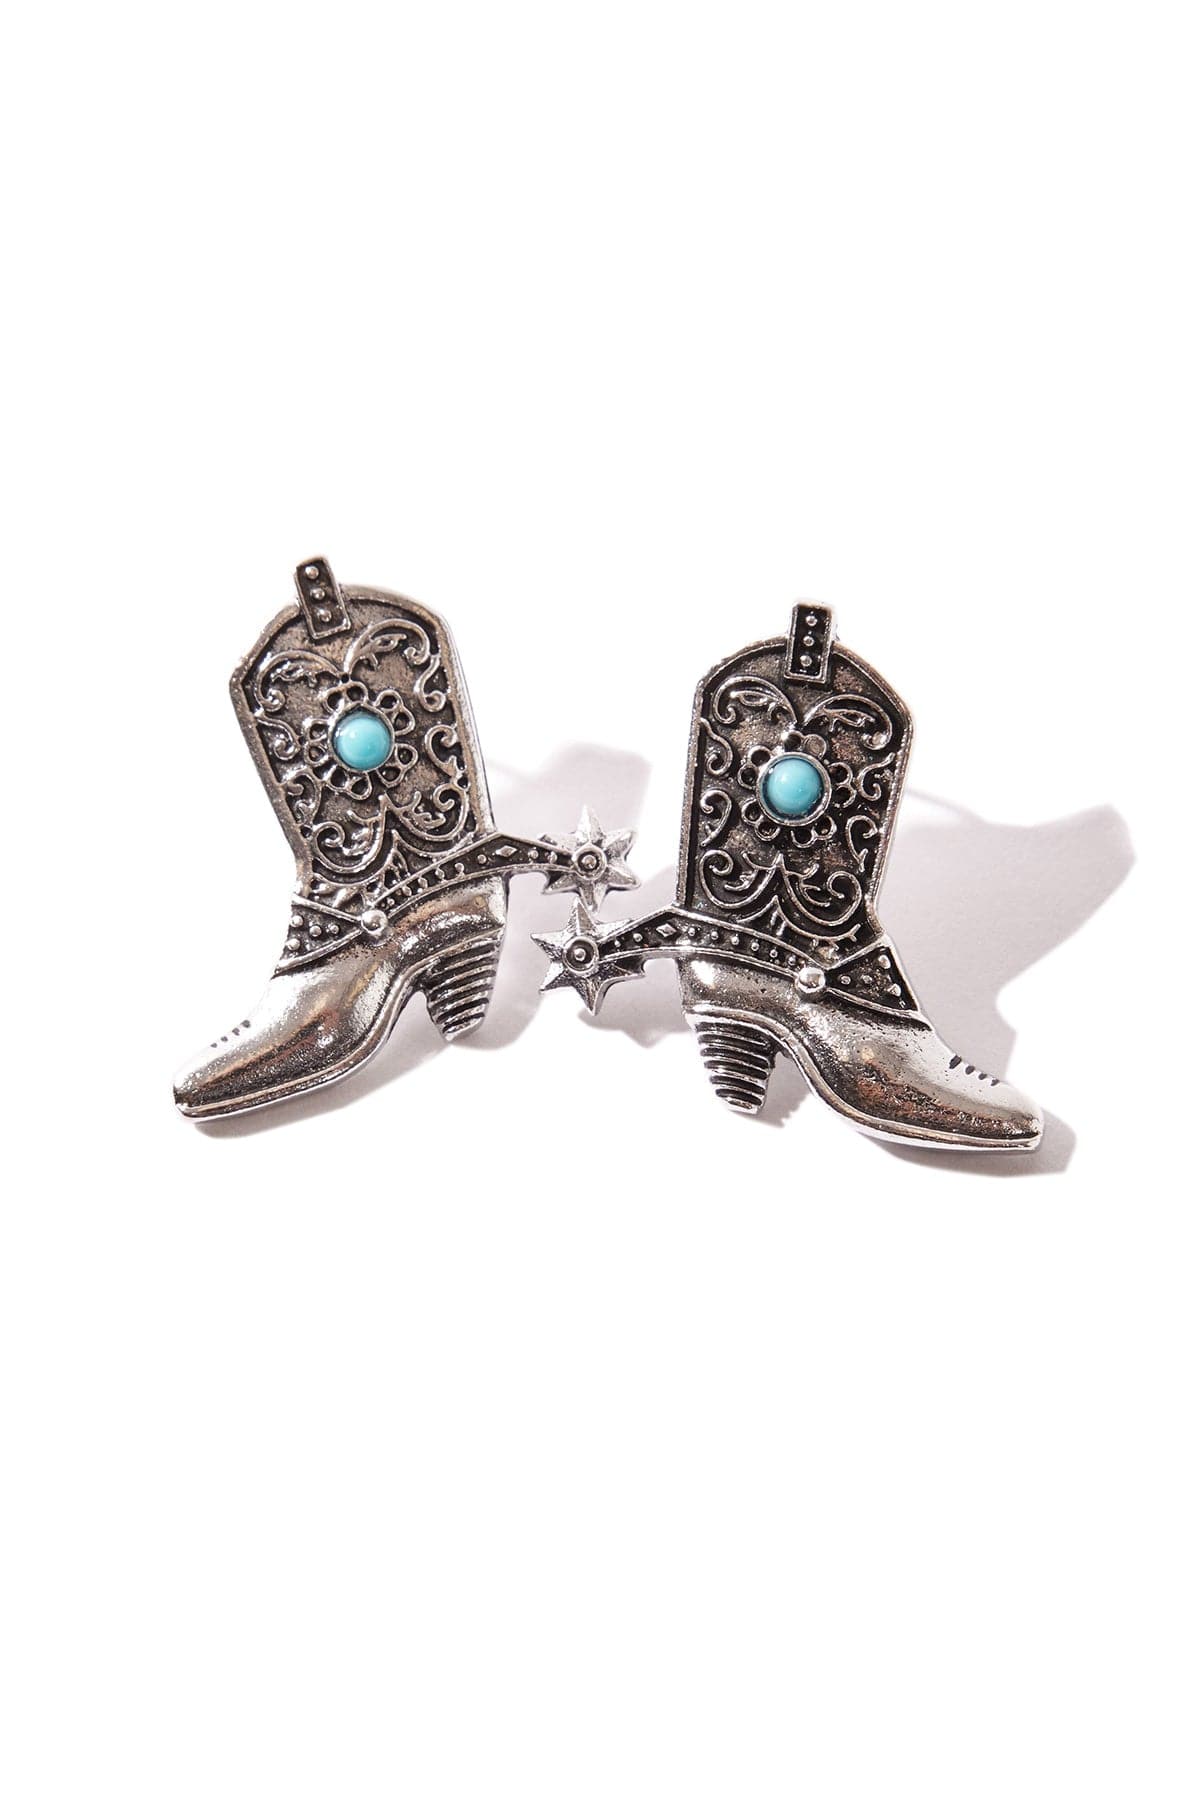 Cowboy Boots Earrings